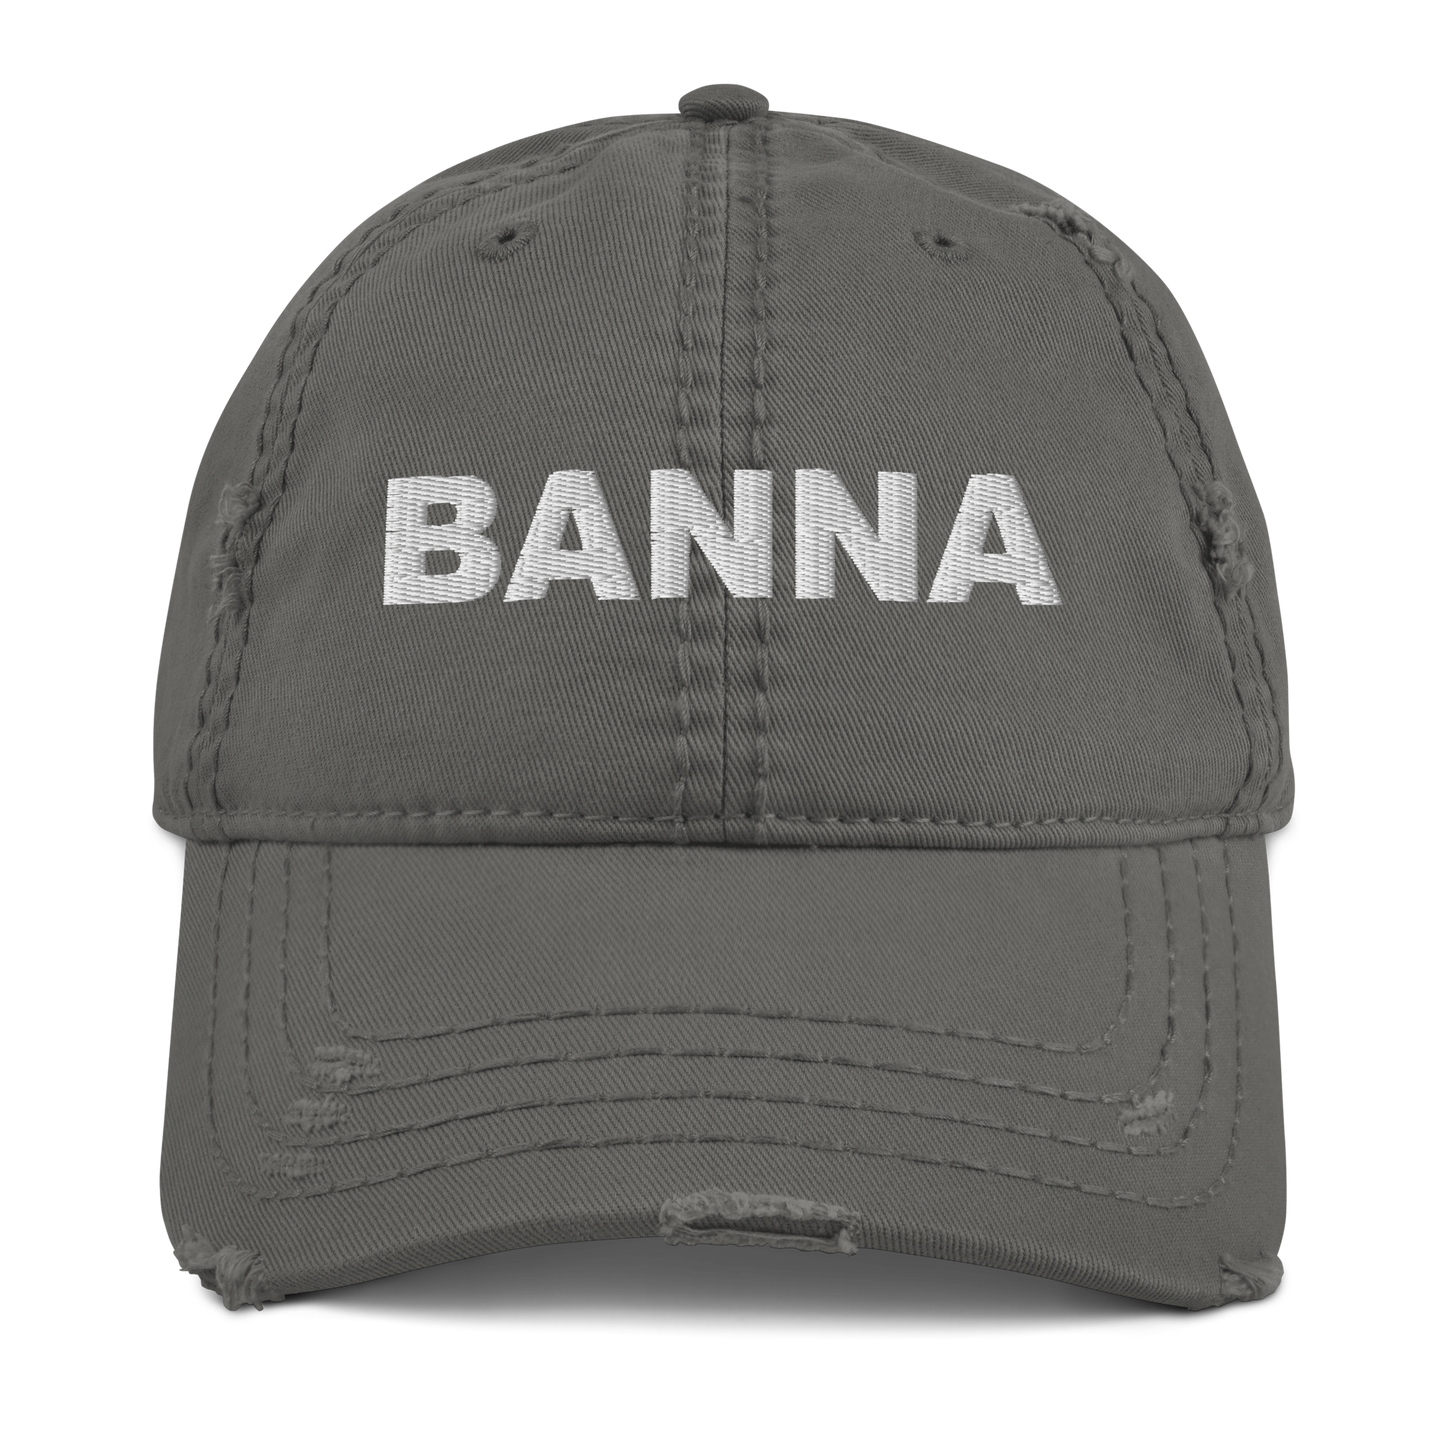 Banna Distressed Dad Hat